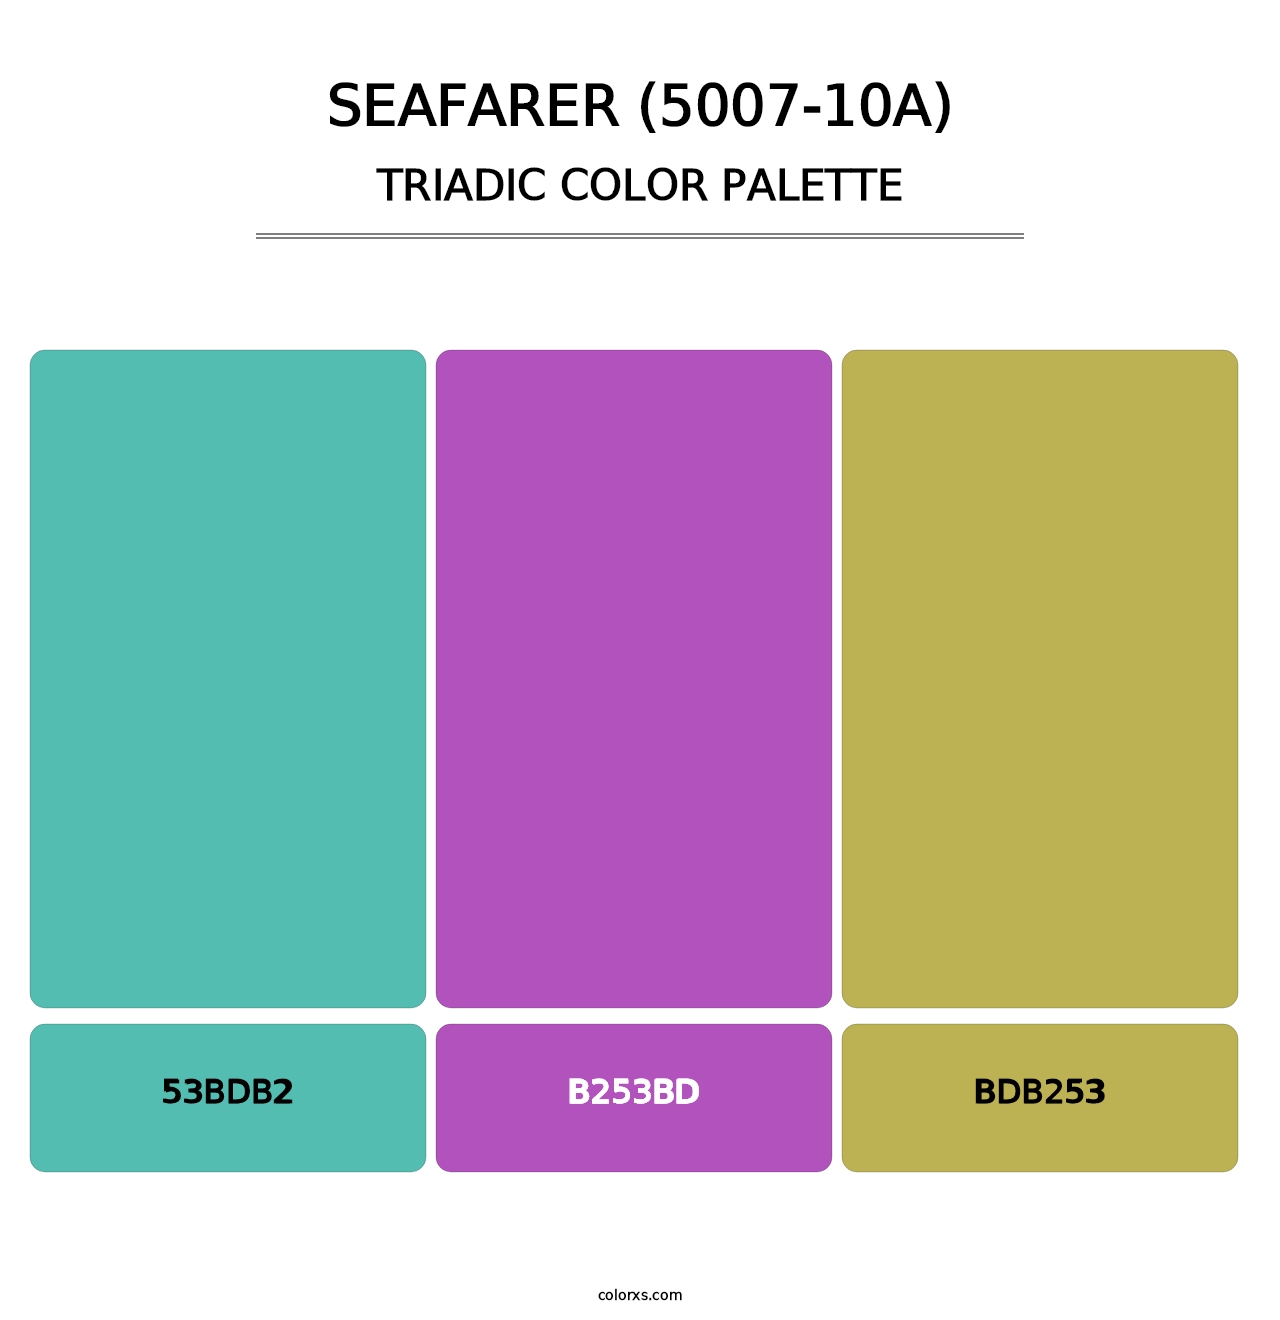 Seafarer (5007-10A) - Triadic Color Palette